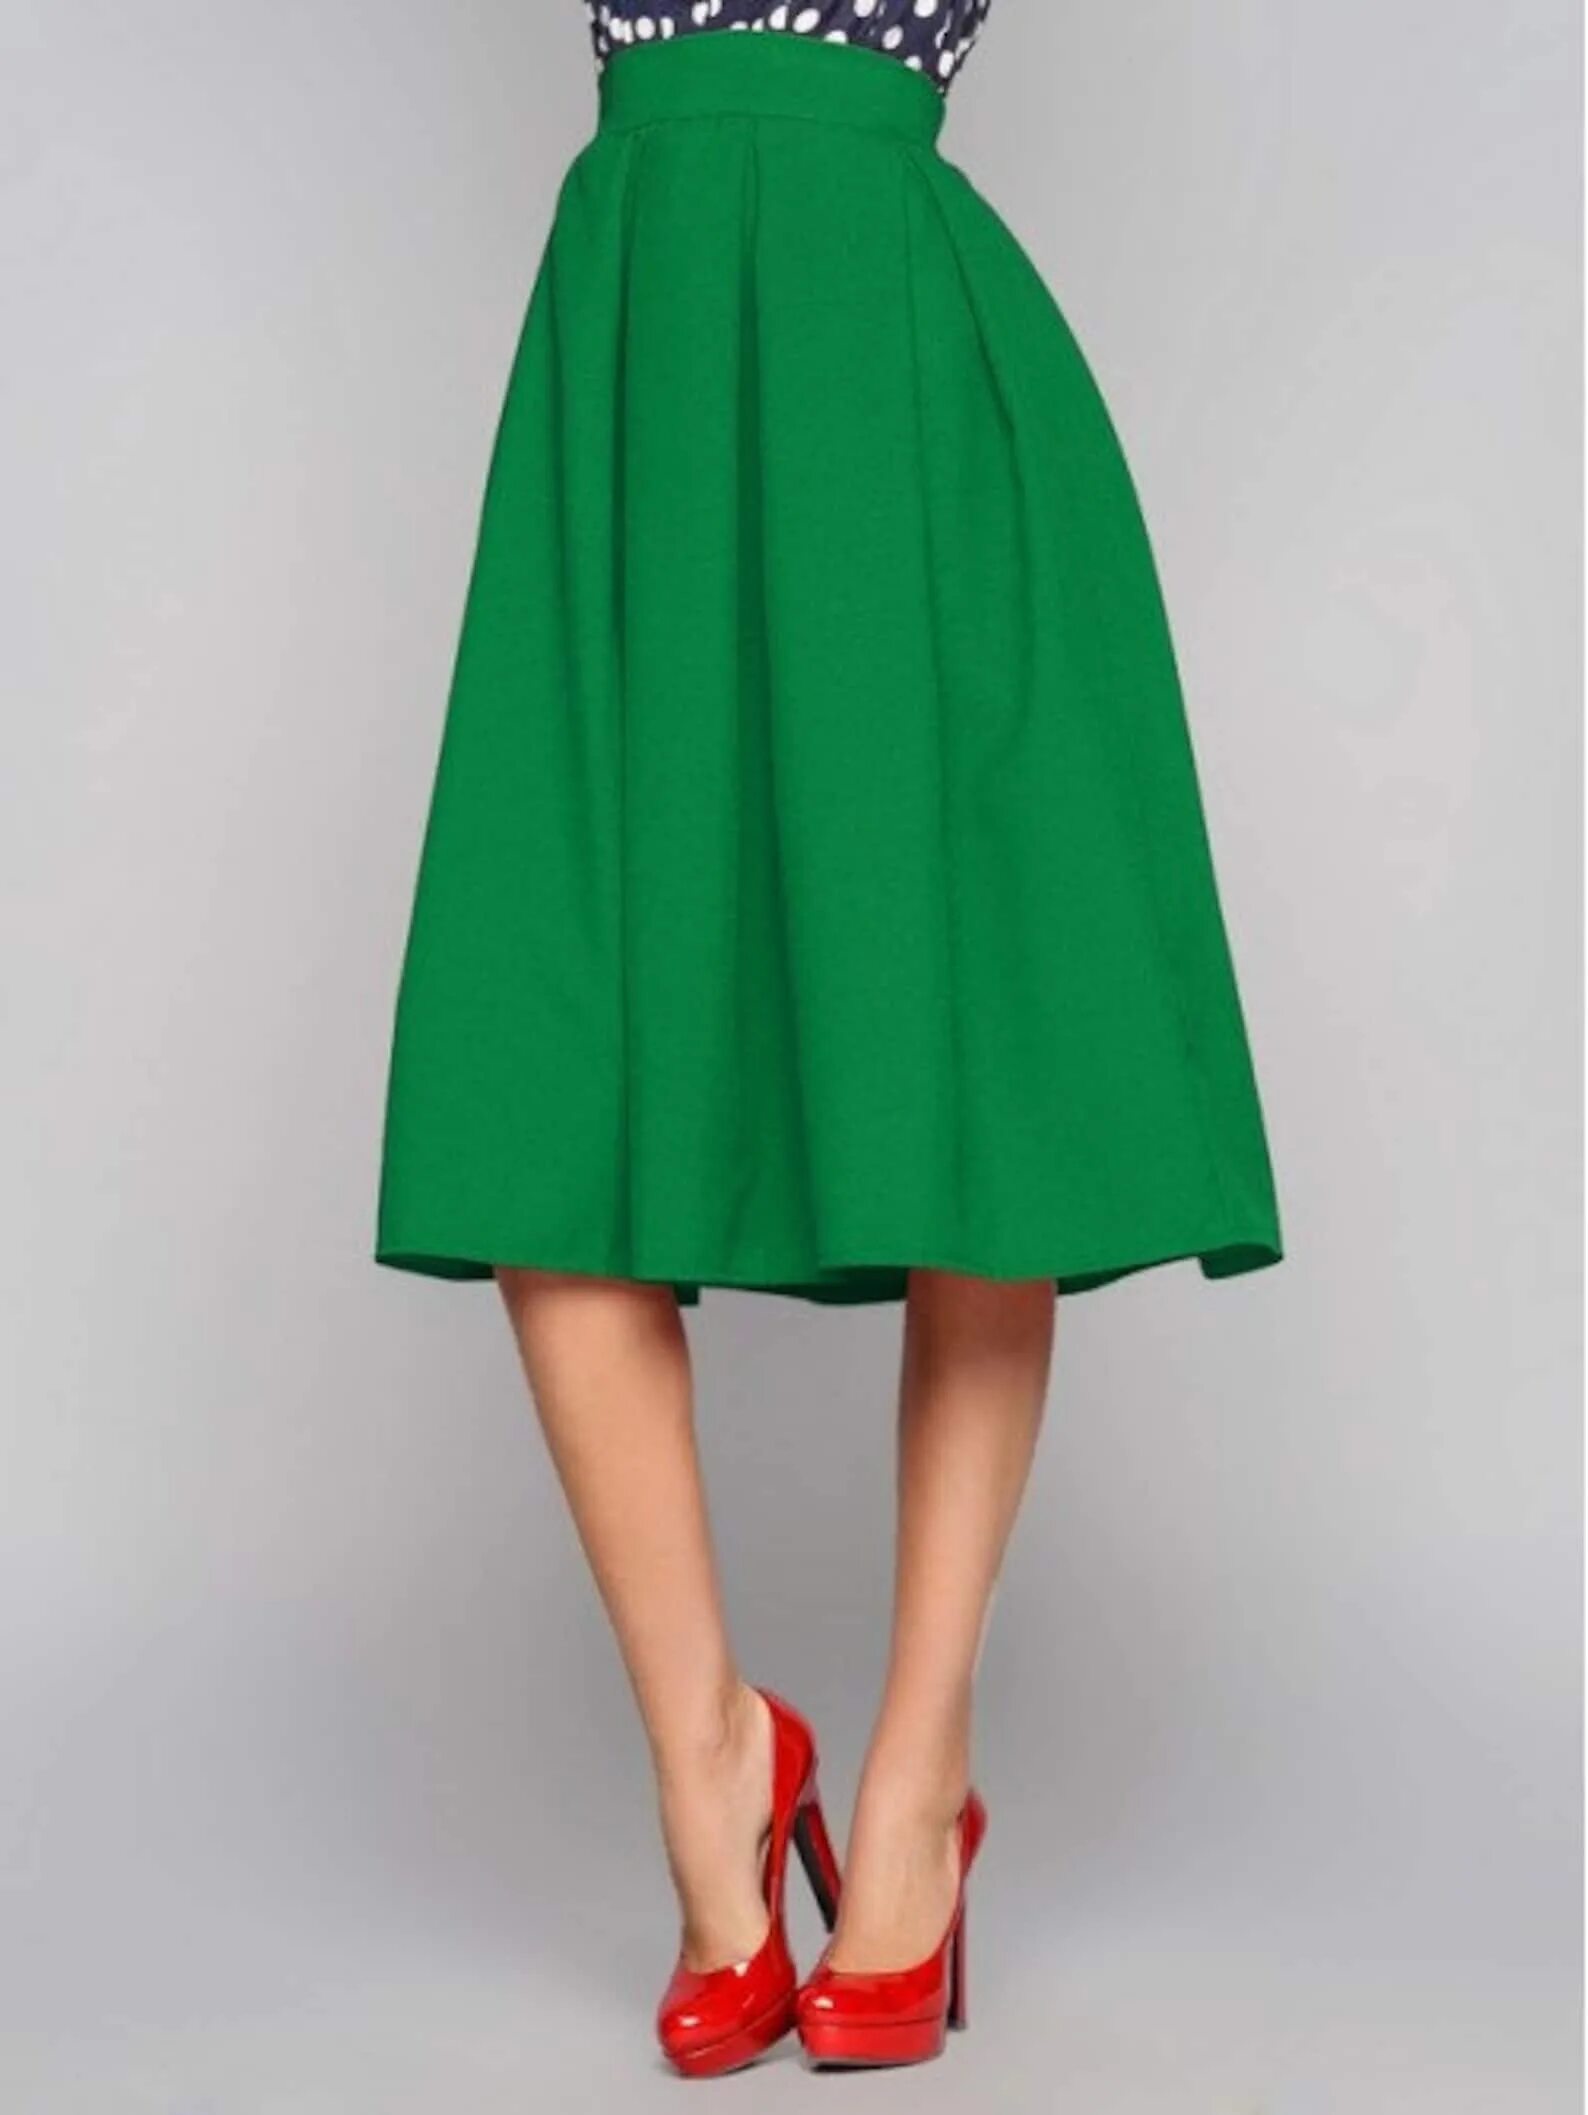 Юбка миди Zarina зеленая. Mohito юбка зеленая. Салатовая юбка. Зеленая юбка миди.